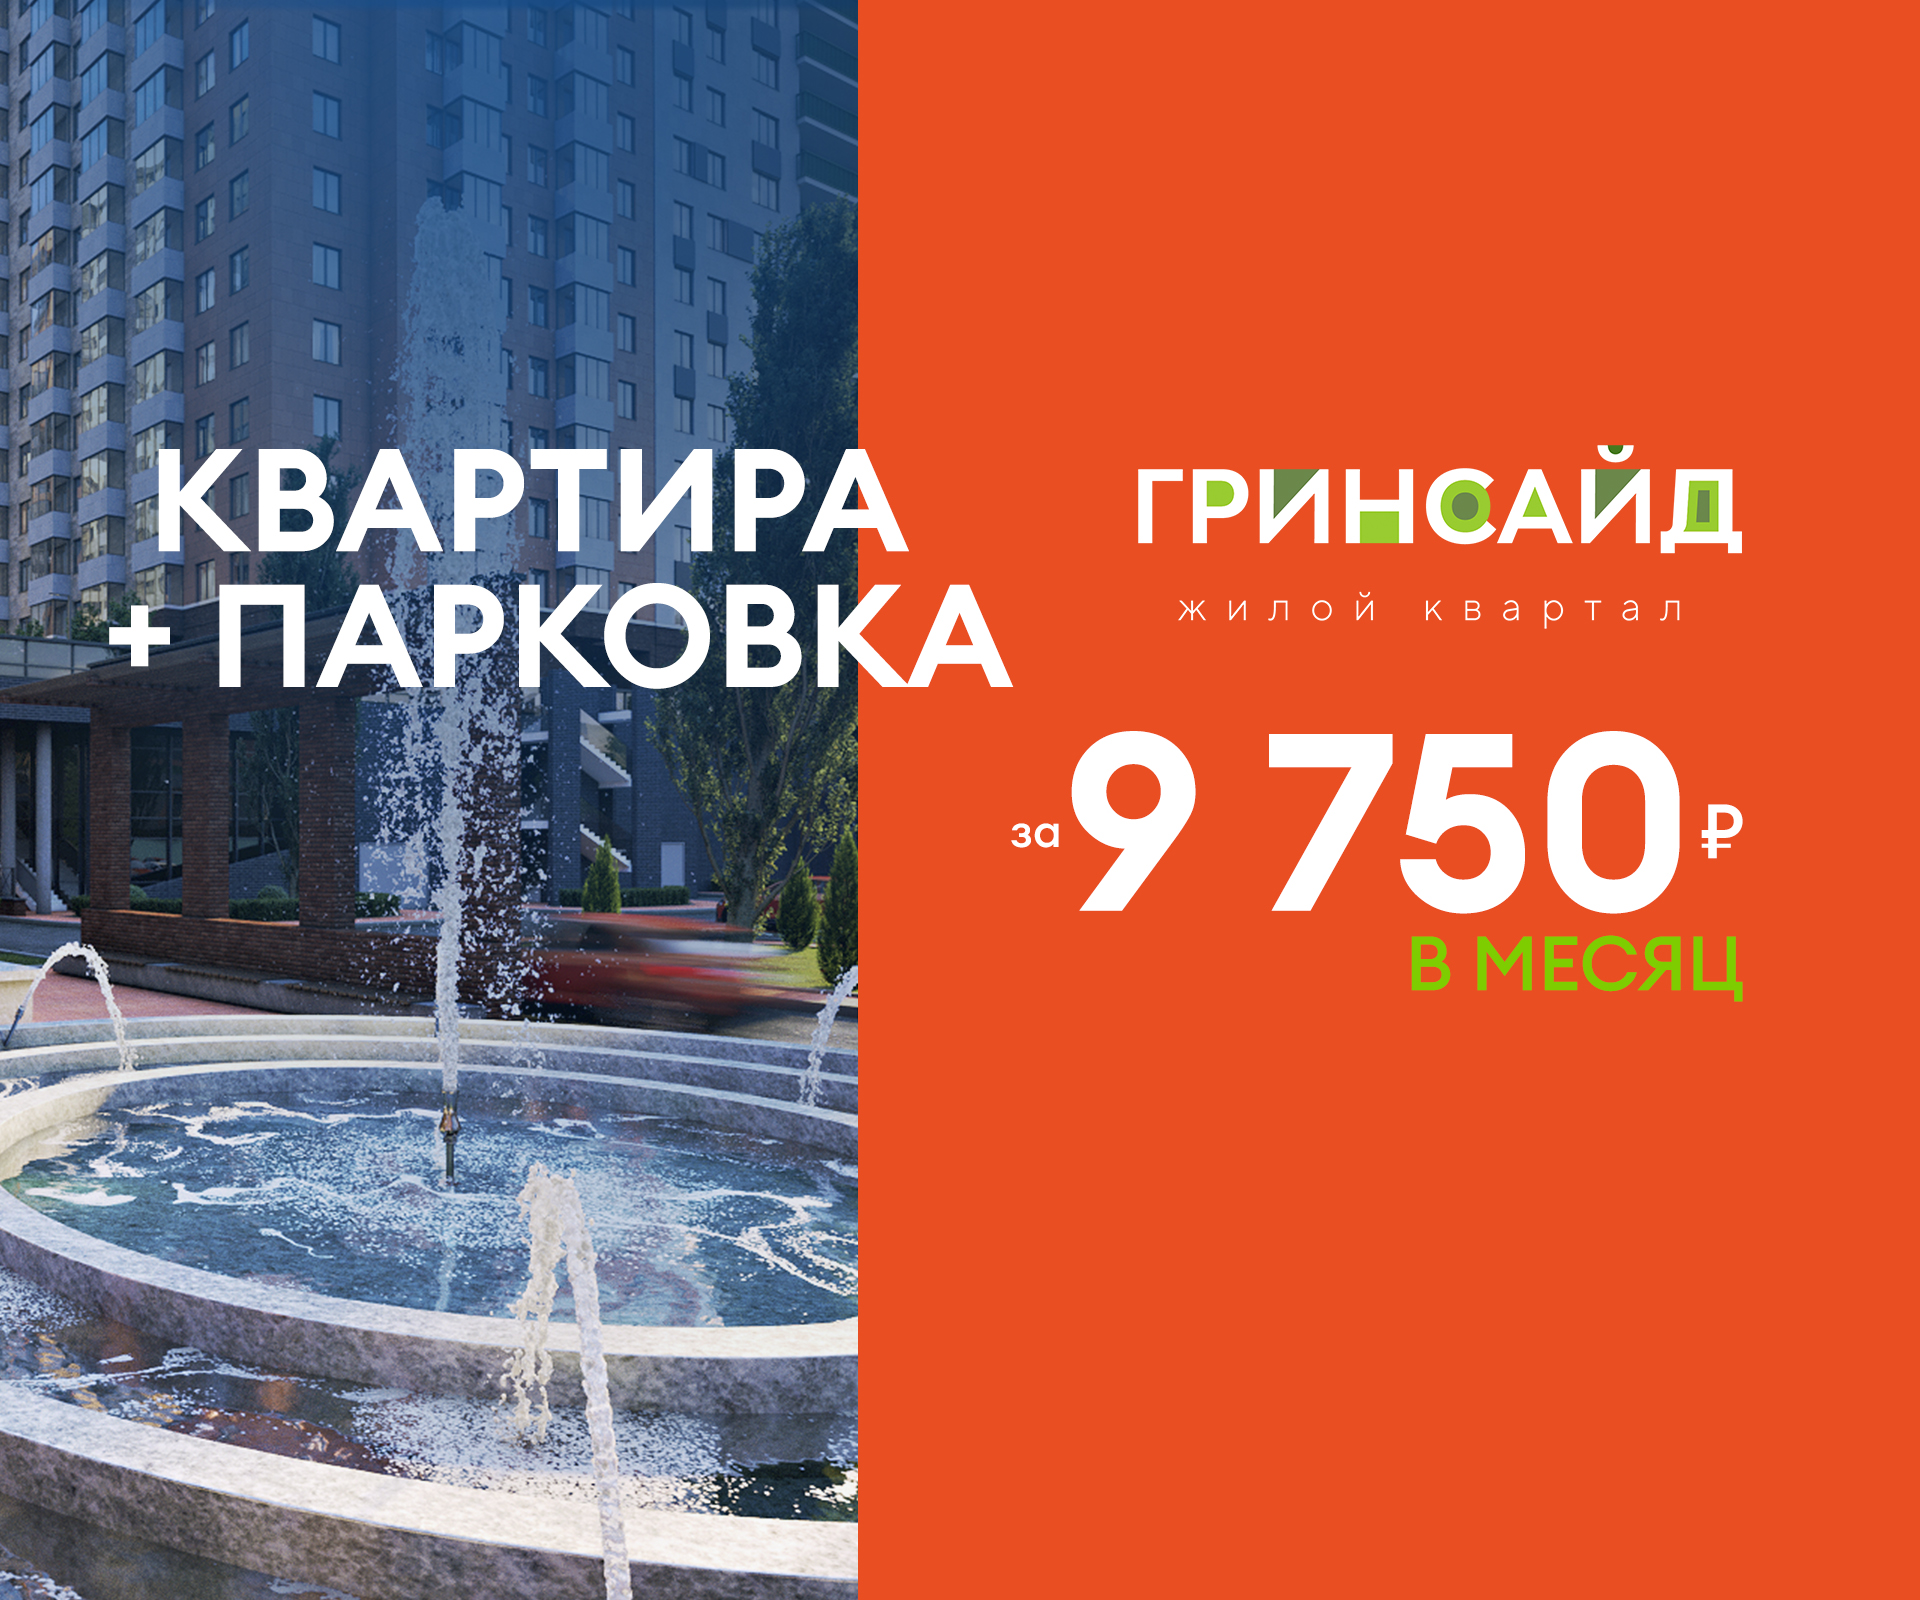 ЖК «Гринсайд»: квартира + парковка 9750 рублей в месяц